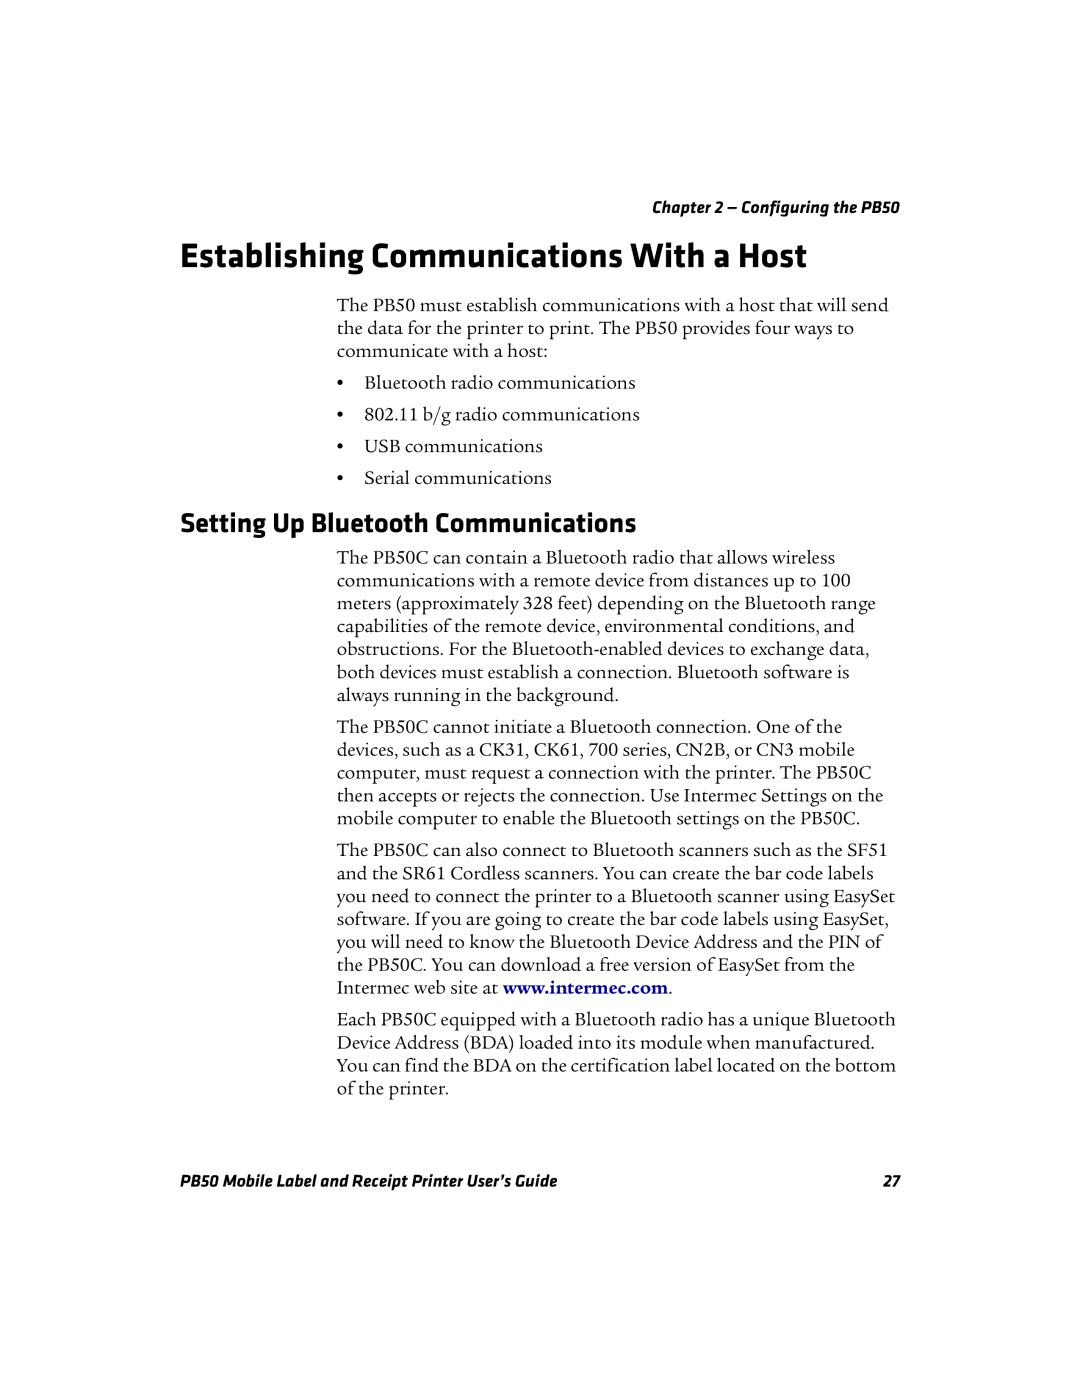 Intermec PB50 manual Establishing Communications With a Host, Setting Up Bluetooth Communications 